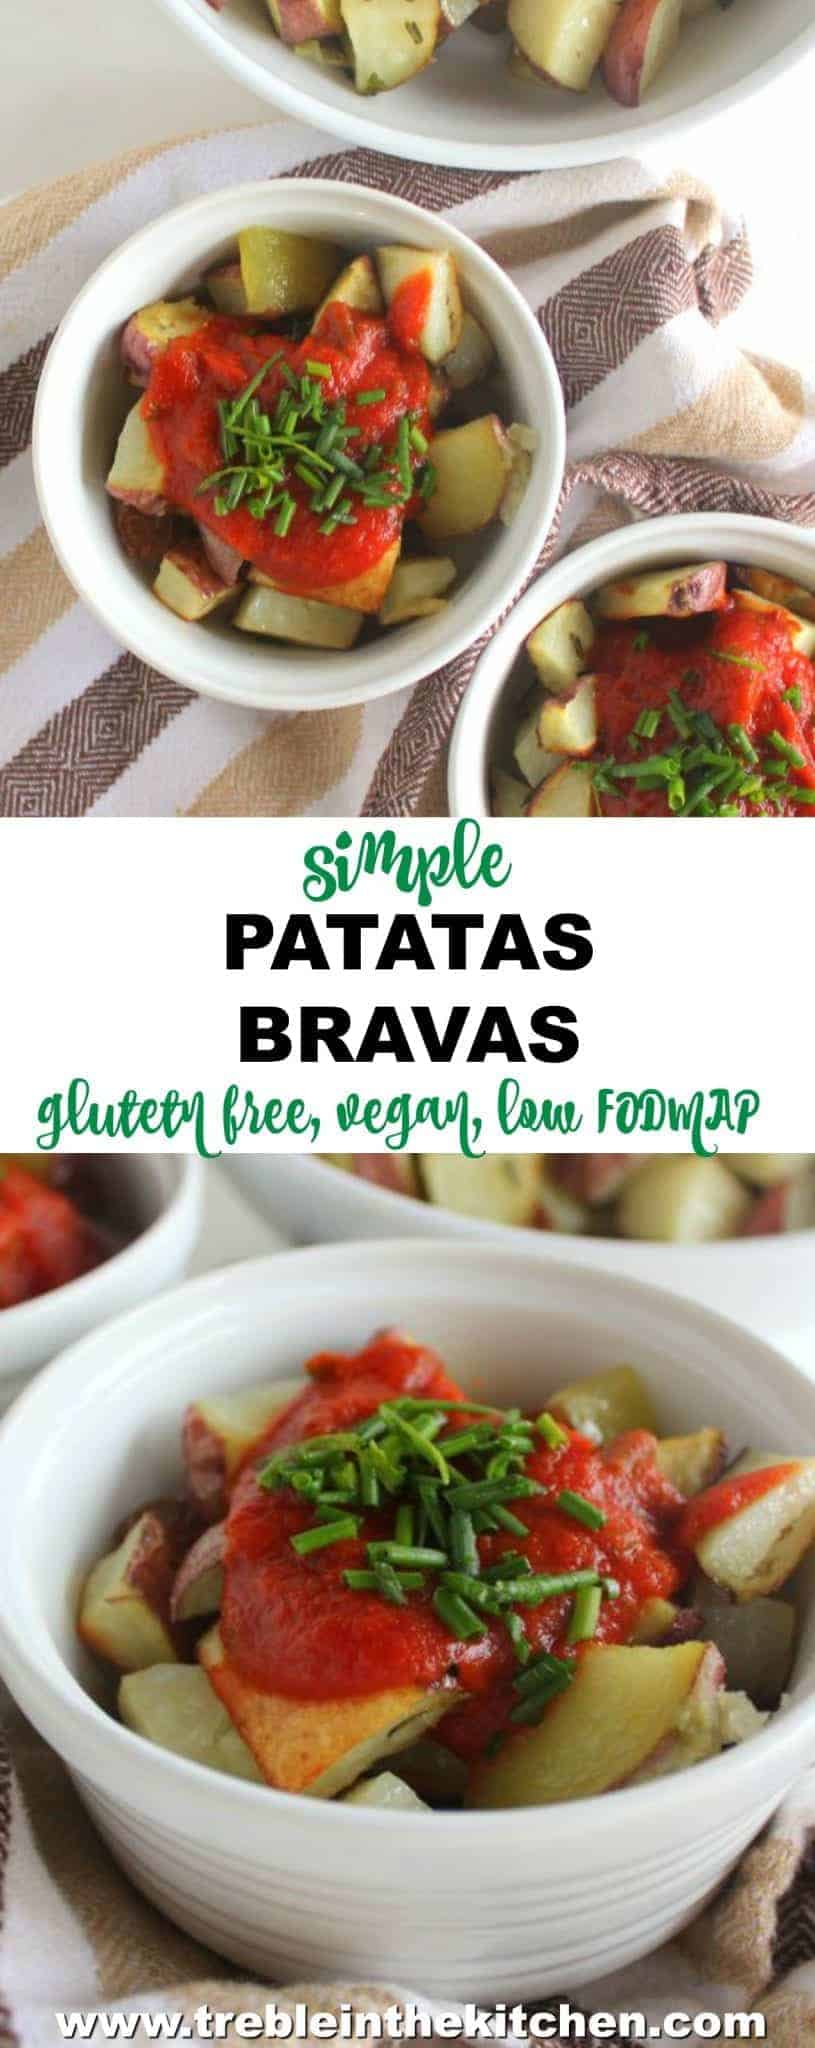 Patatas Bravas from Treble in the Kitchen